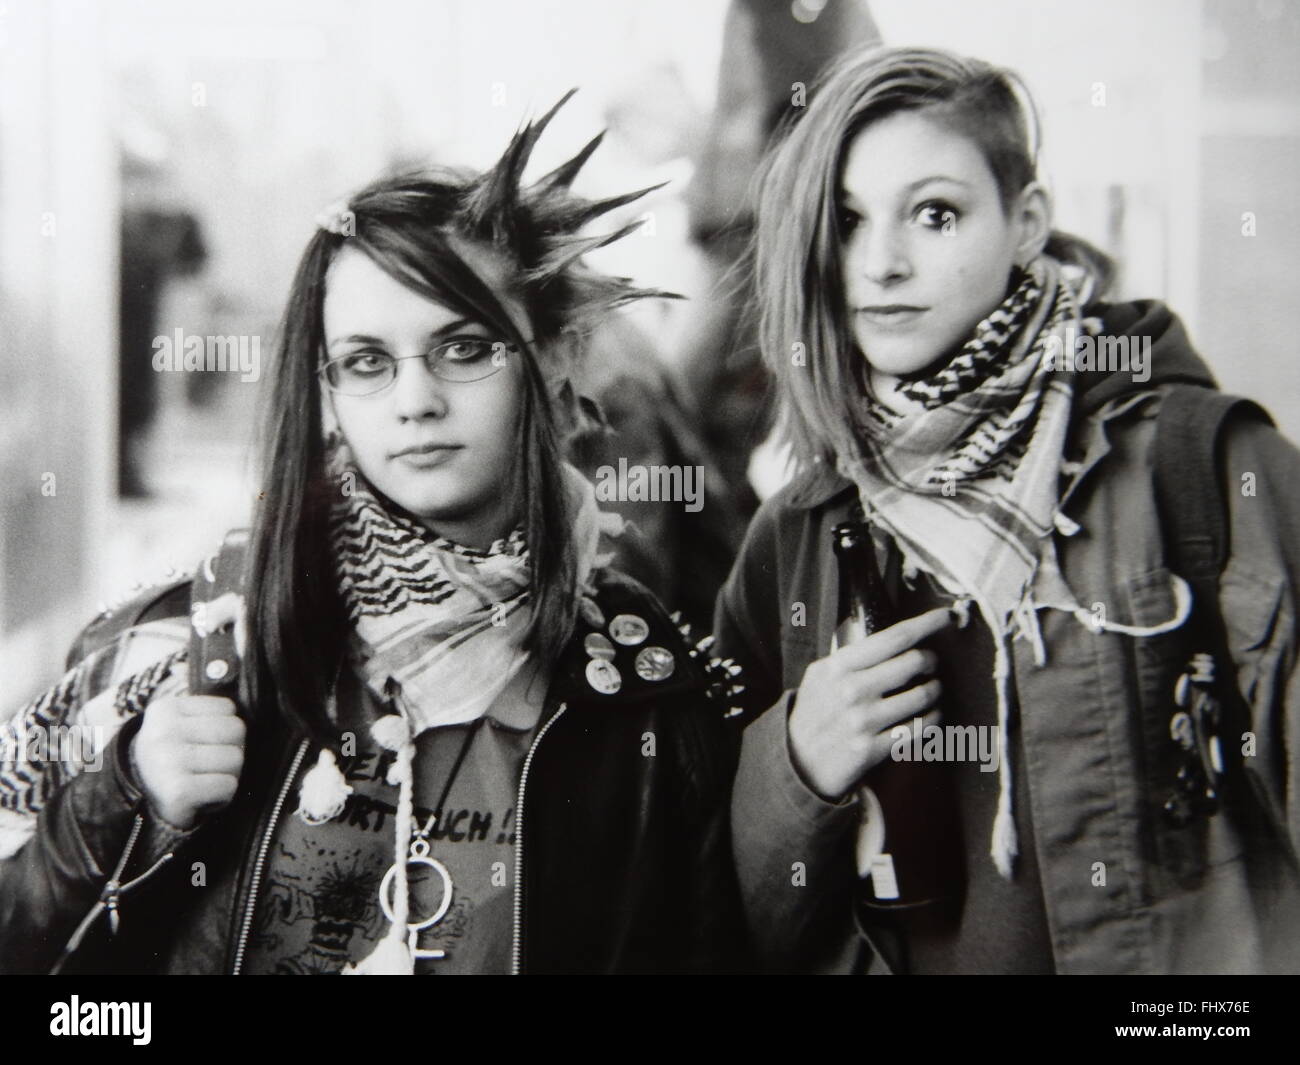 zwei punker Girls in Berlin, Deutschland, 2003 Stockfoto